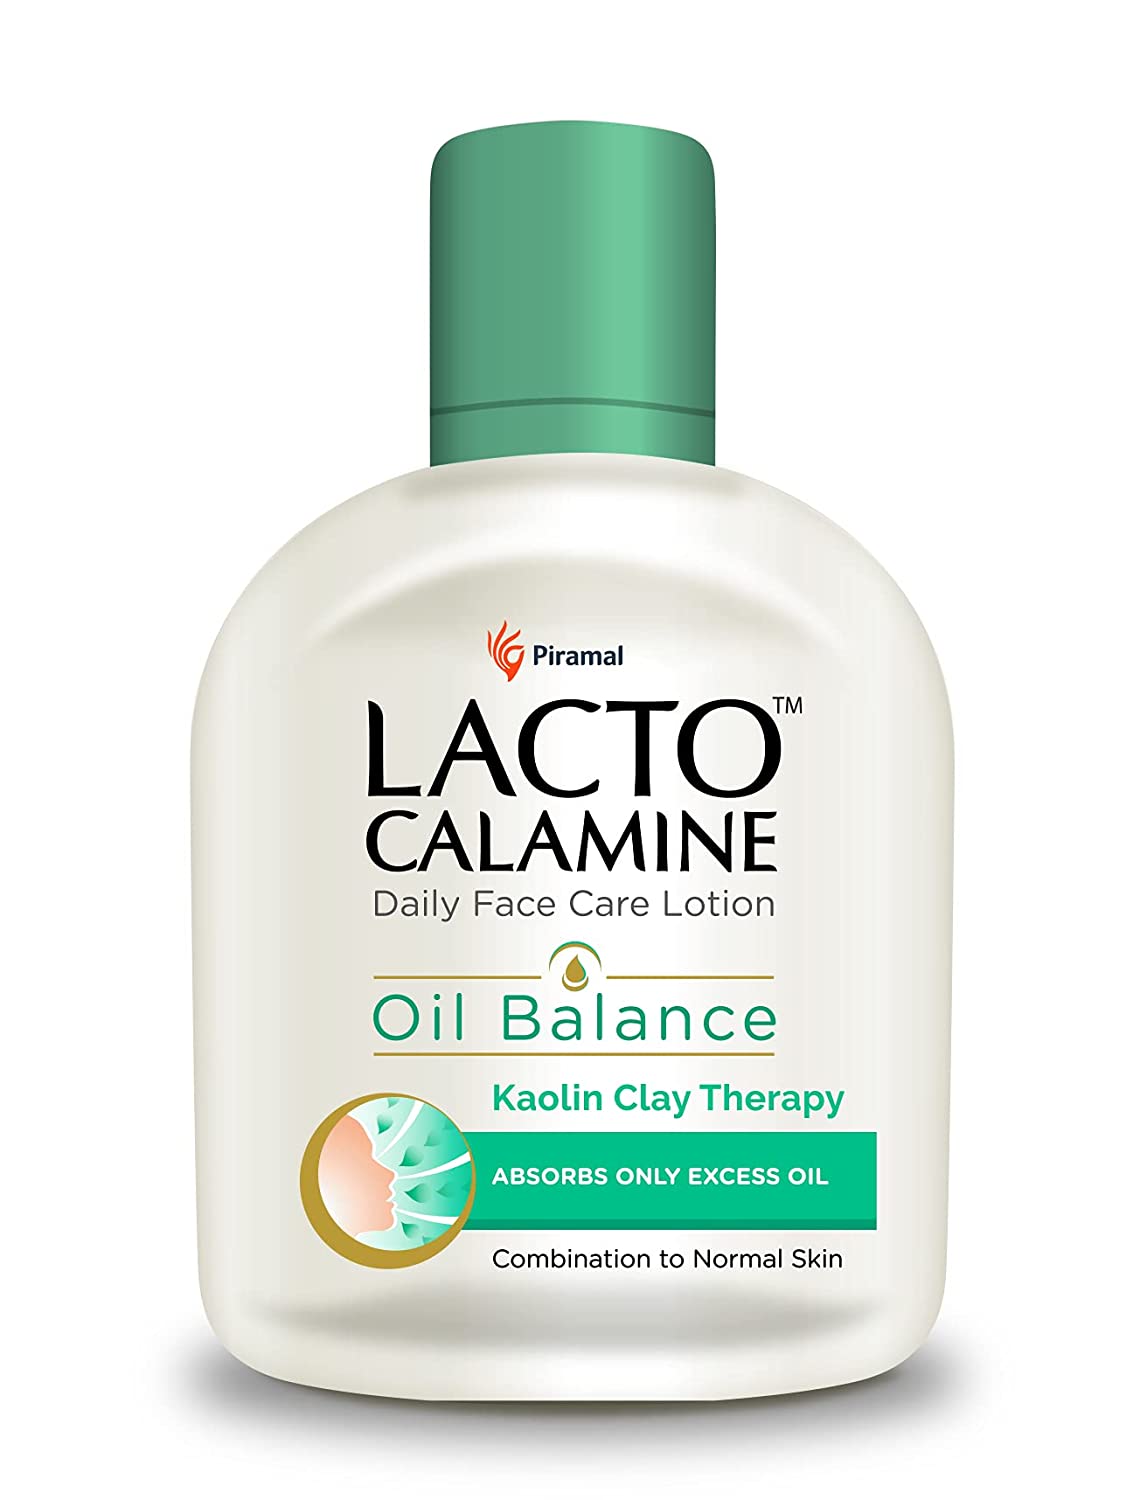 Piramal Lacto calamine face lotion 